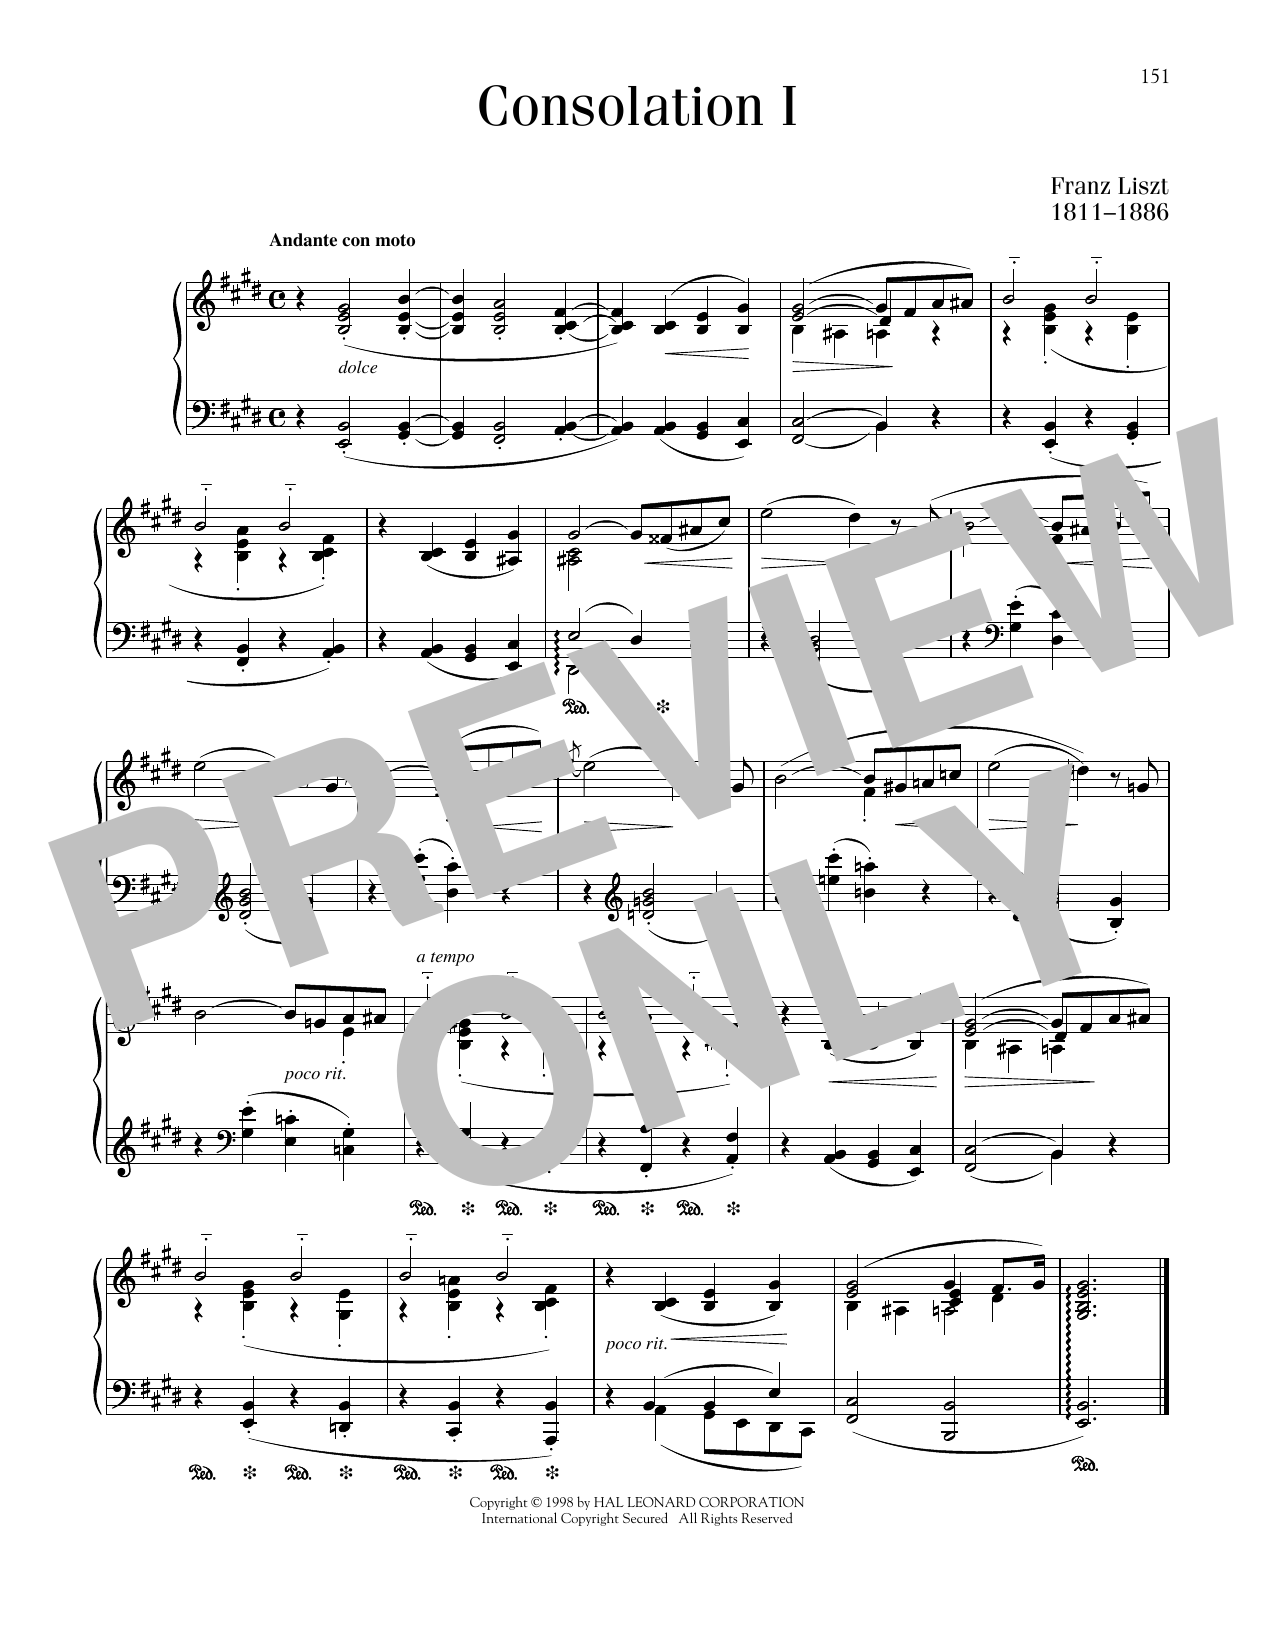 Franz Liszt Consolation No. 1 In E Major sheet music notes printable PDF score